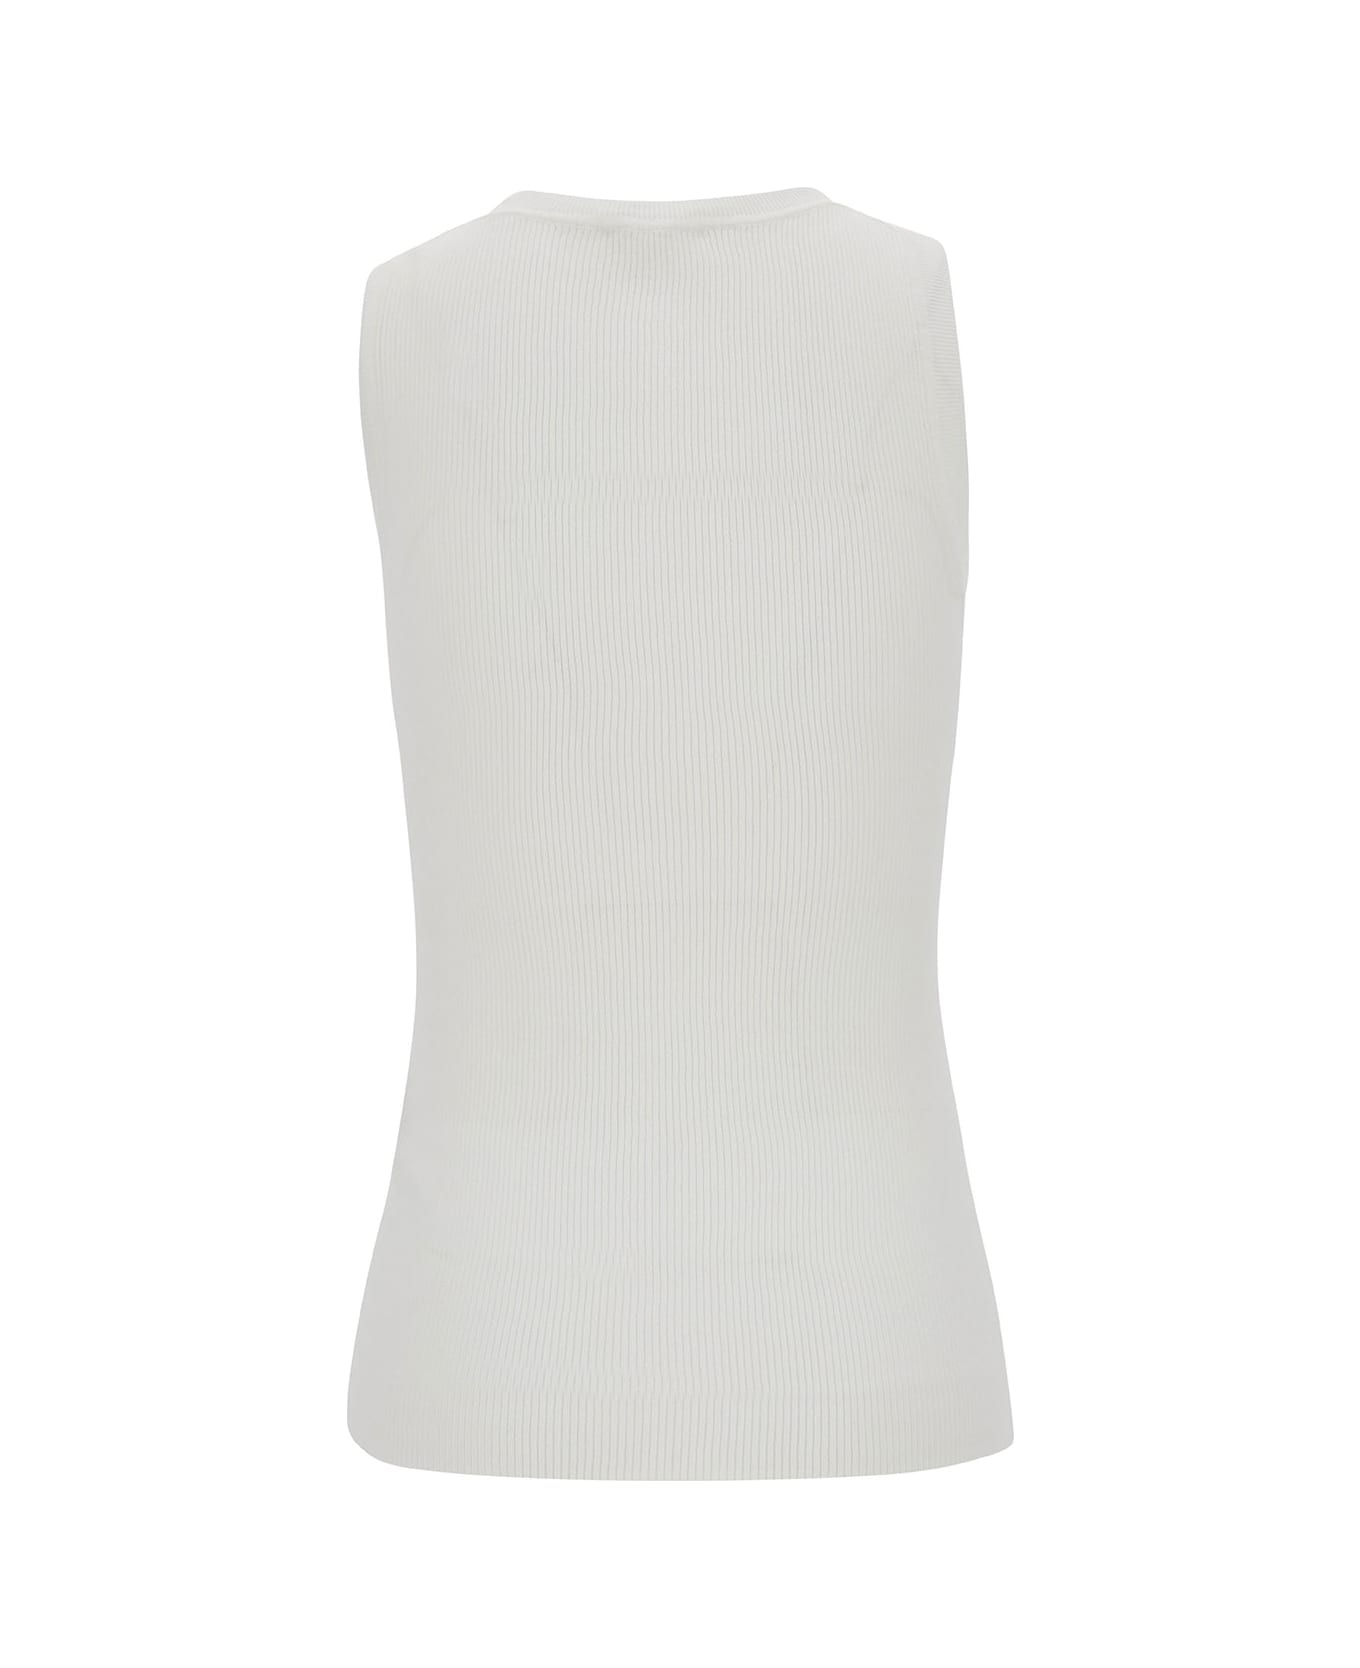 Parosh White Ribbed Tank Top With U Neckline In Cotton Blend Woman - White